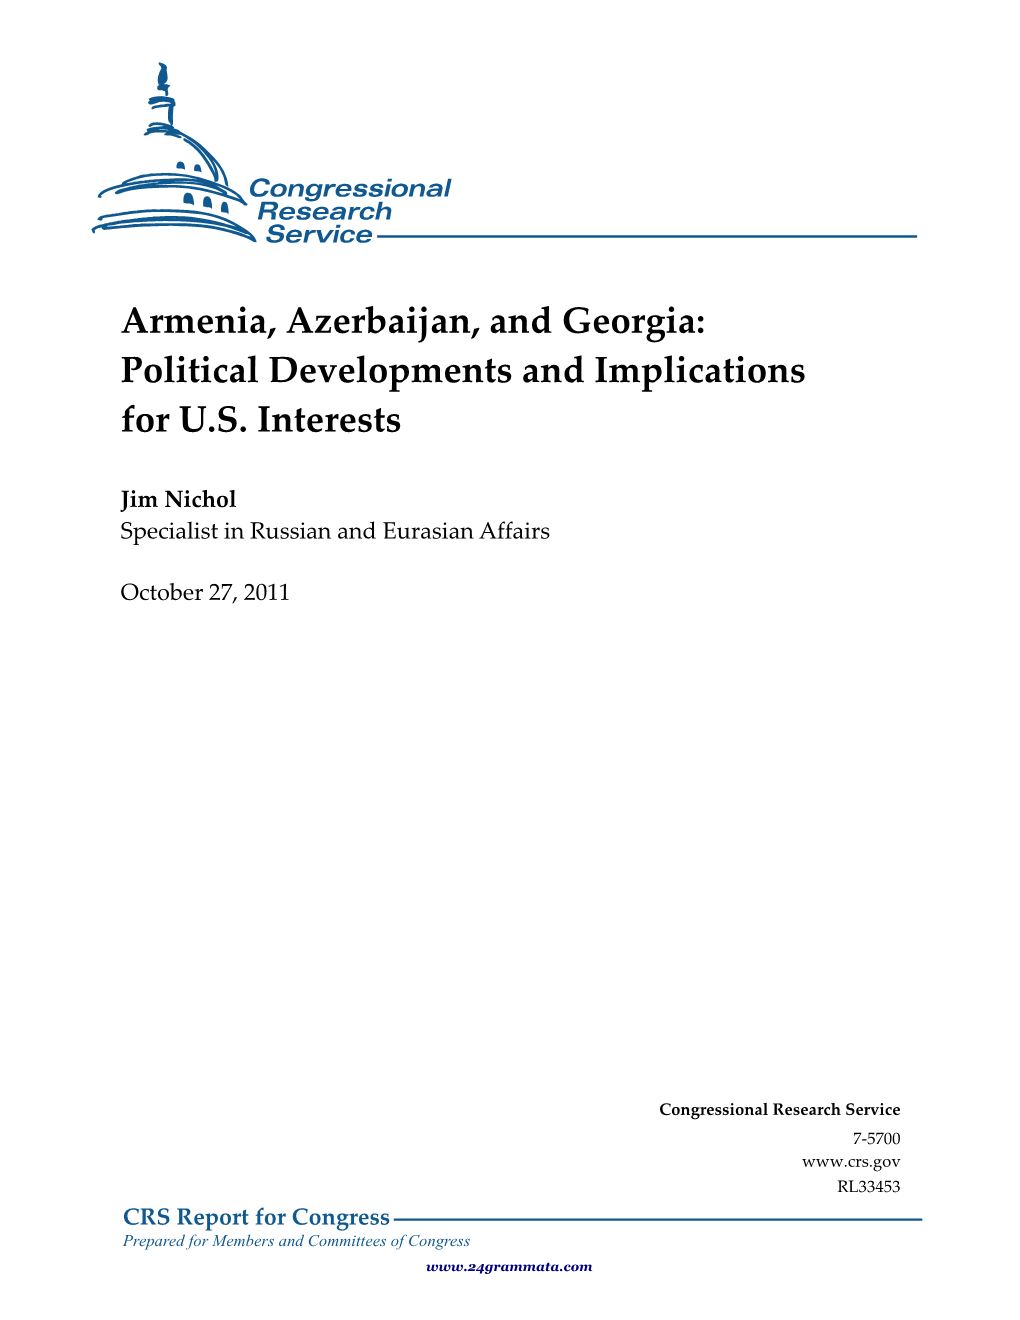 Armenia, Azerbaijan, and Georgia: Political Developments and Implications for US Interests